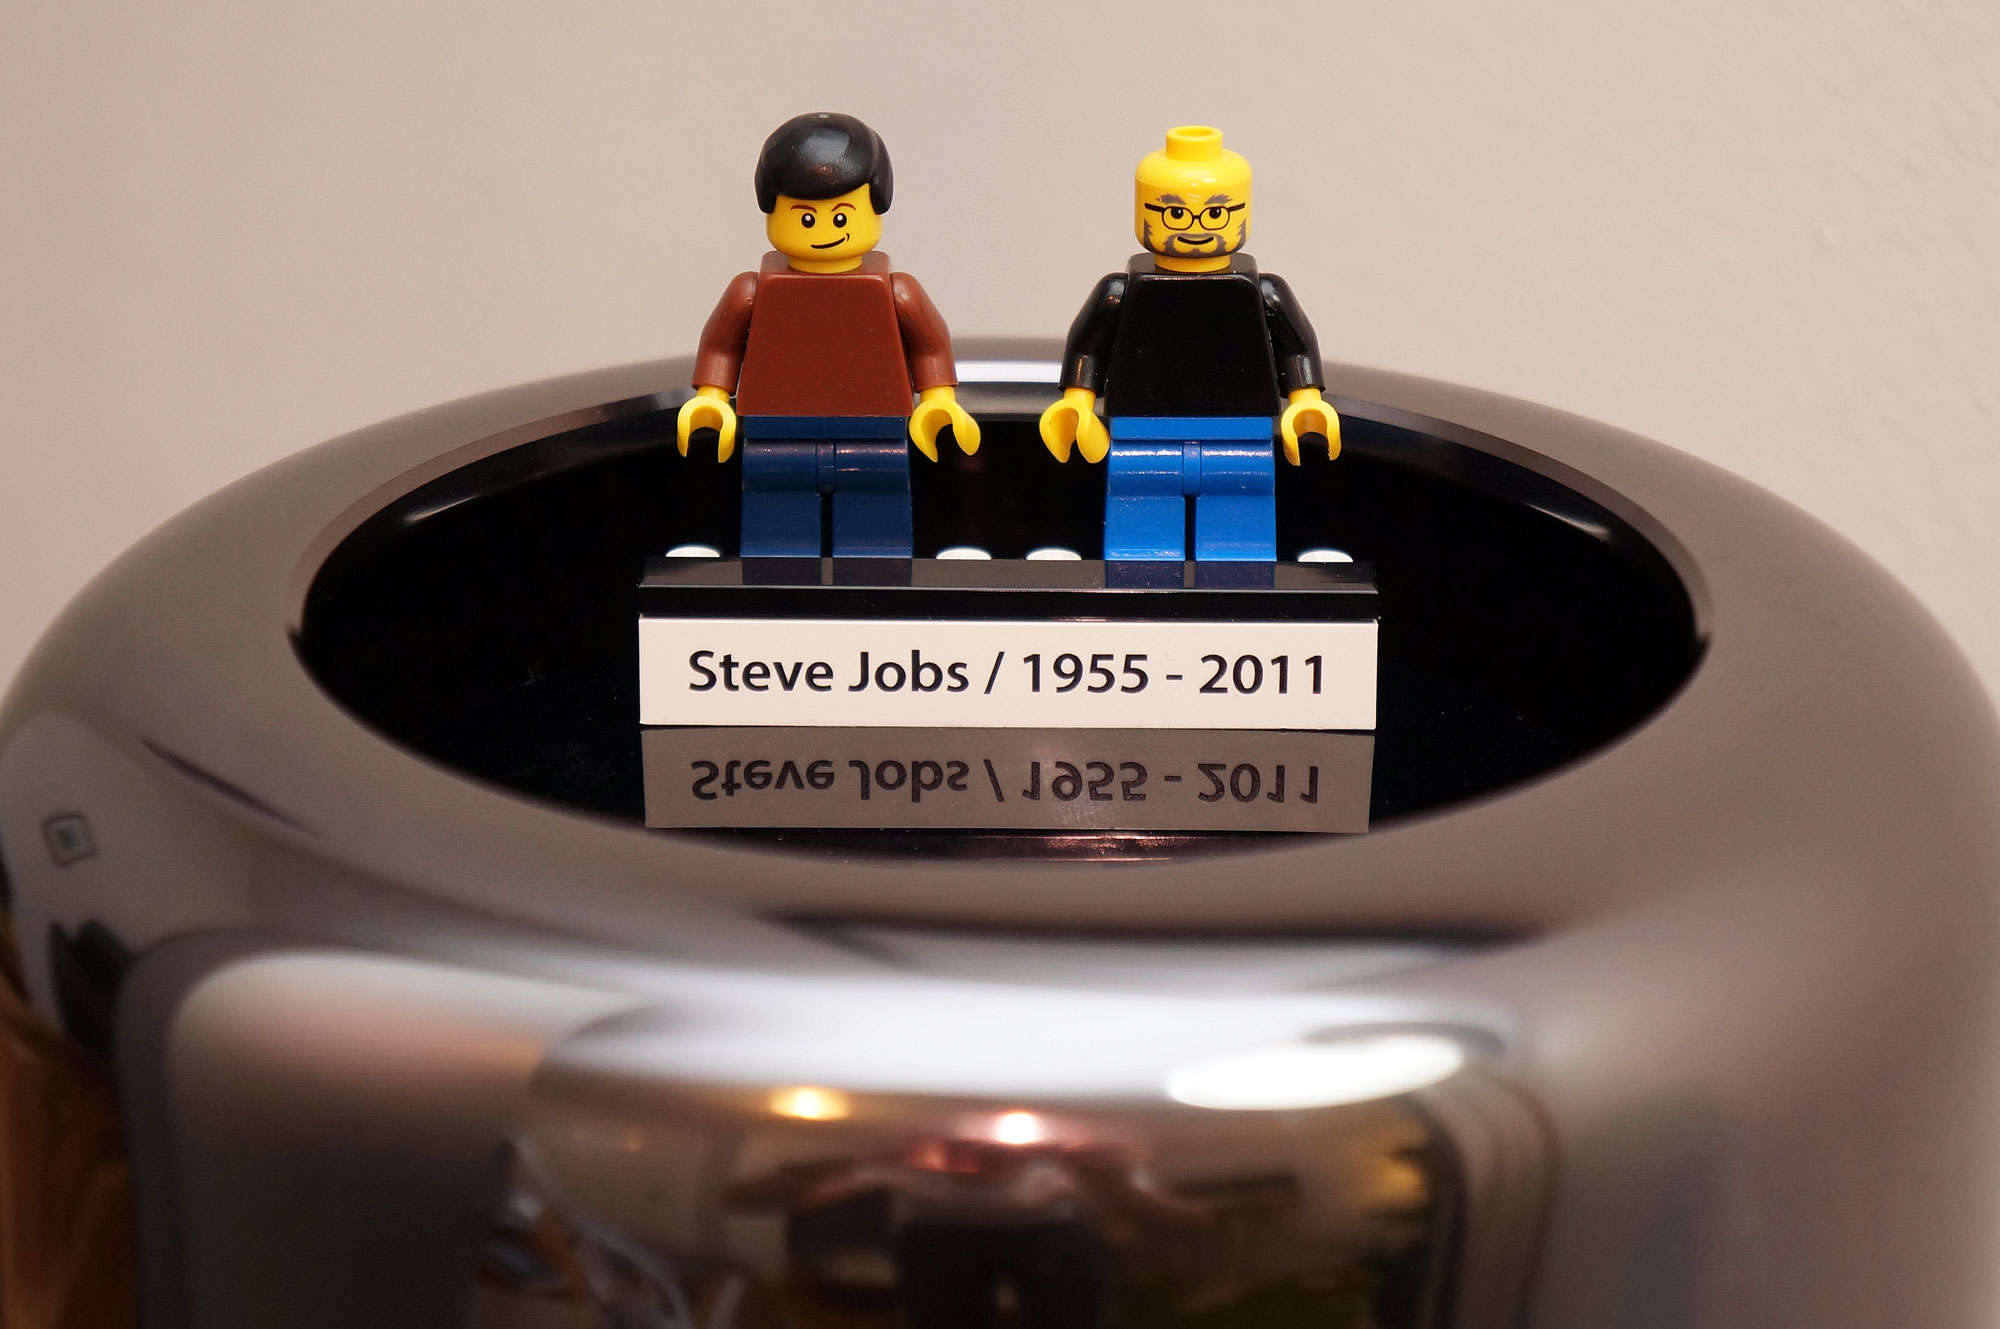 Steve Jobs custom Lego figures